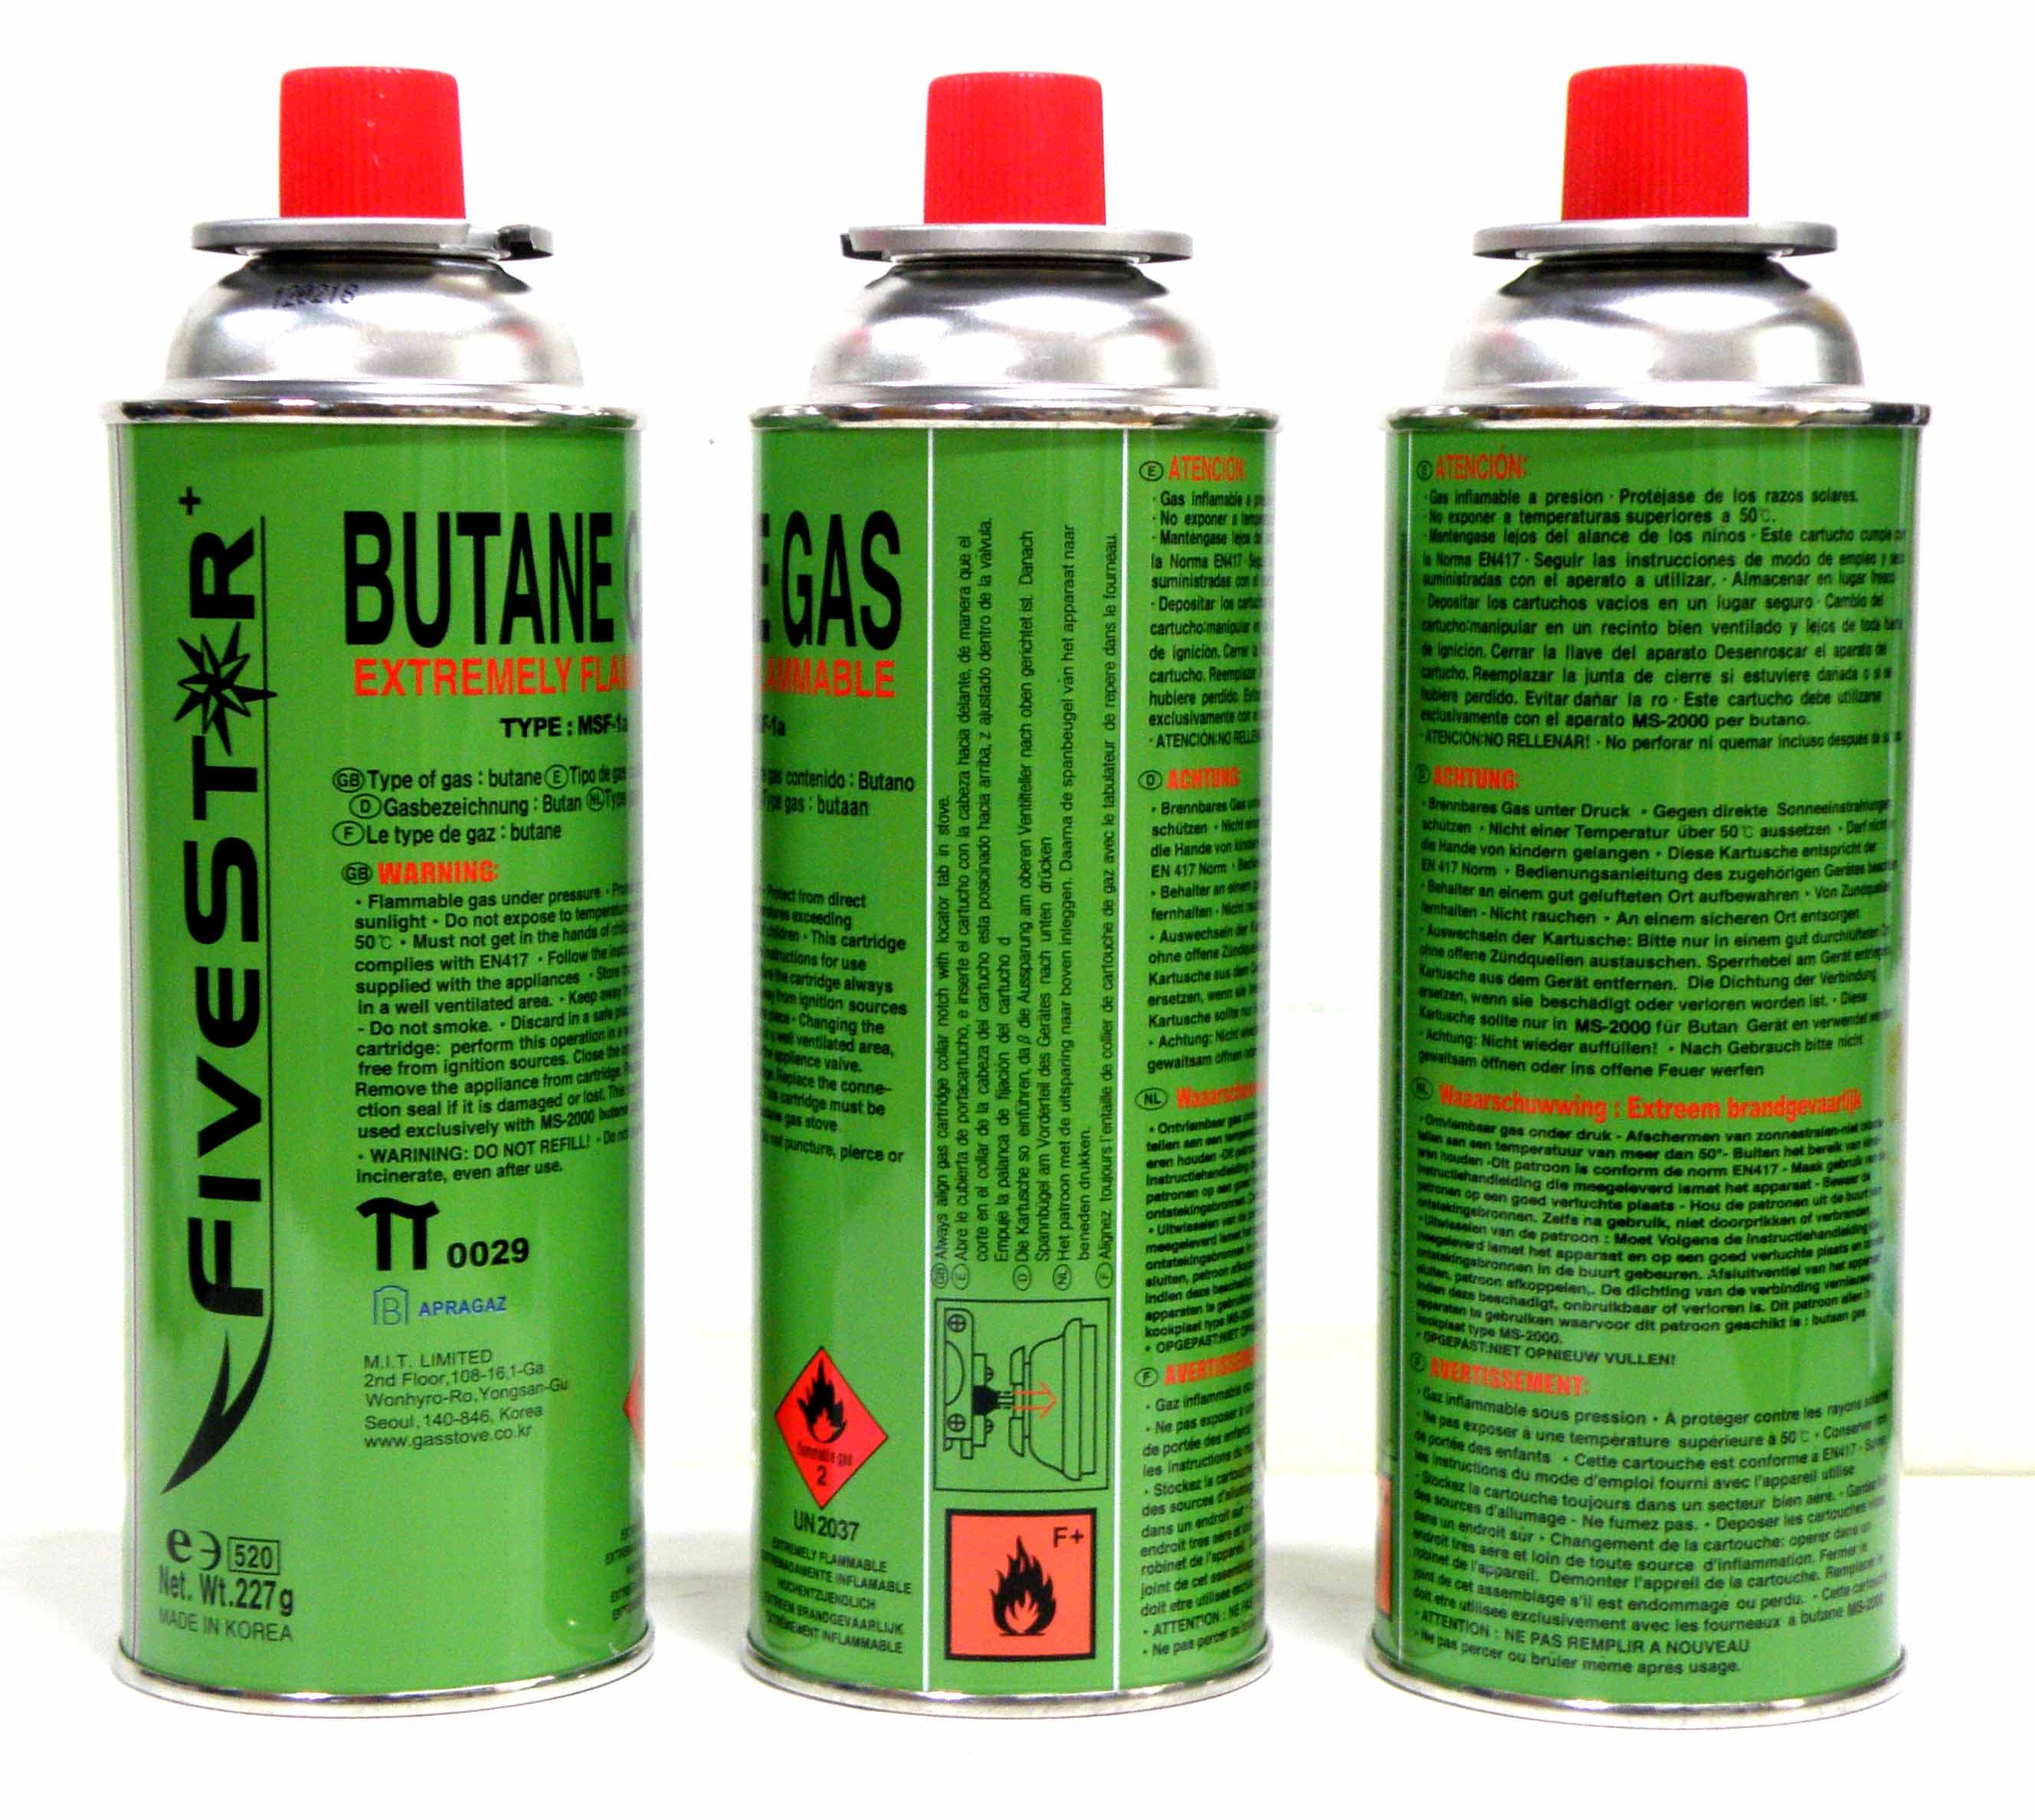 Butane gas cartridge